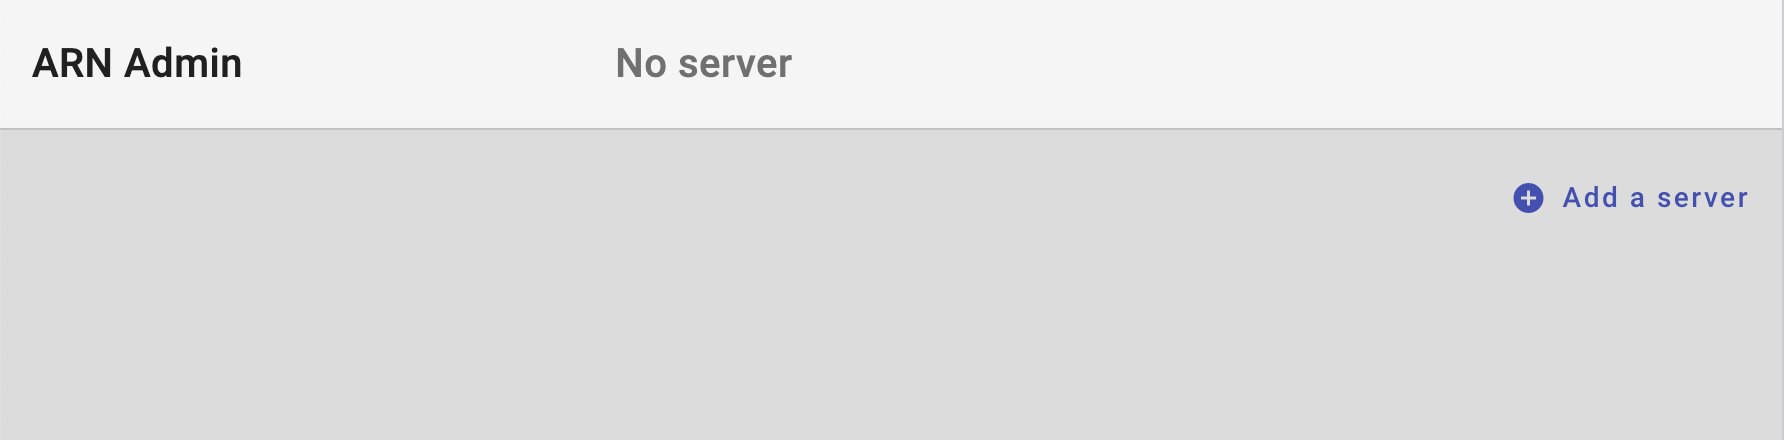 Add server button